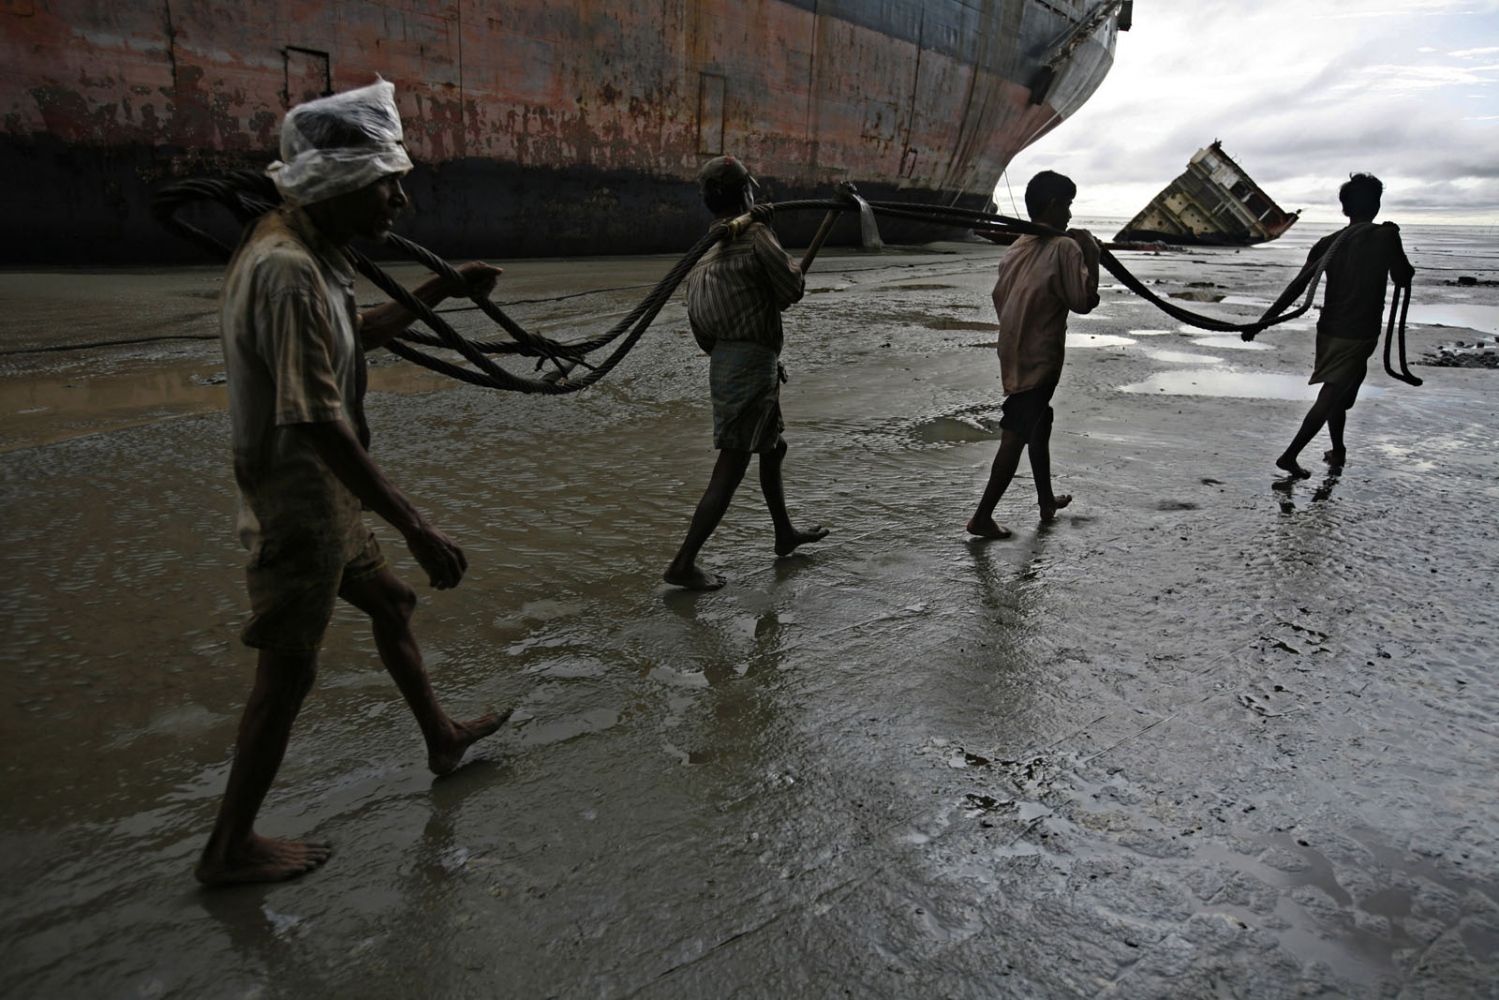 Ship Breaking Yard; Bangladesh - 